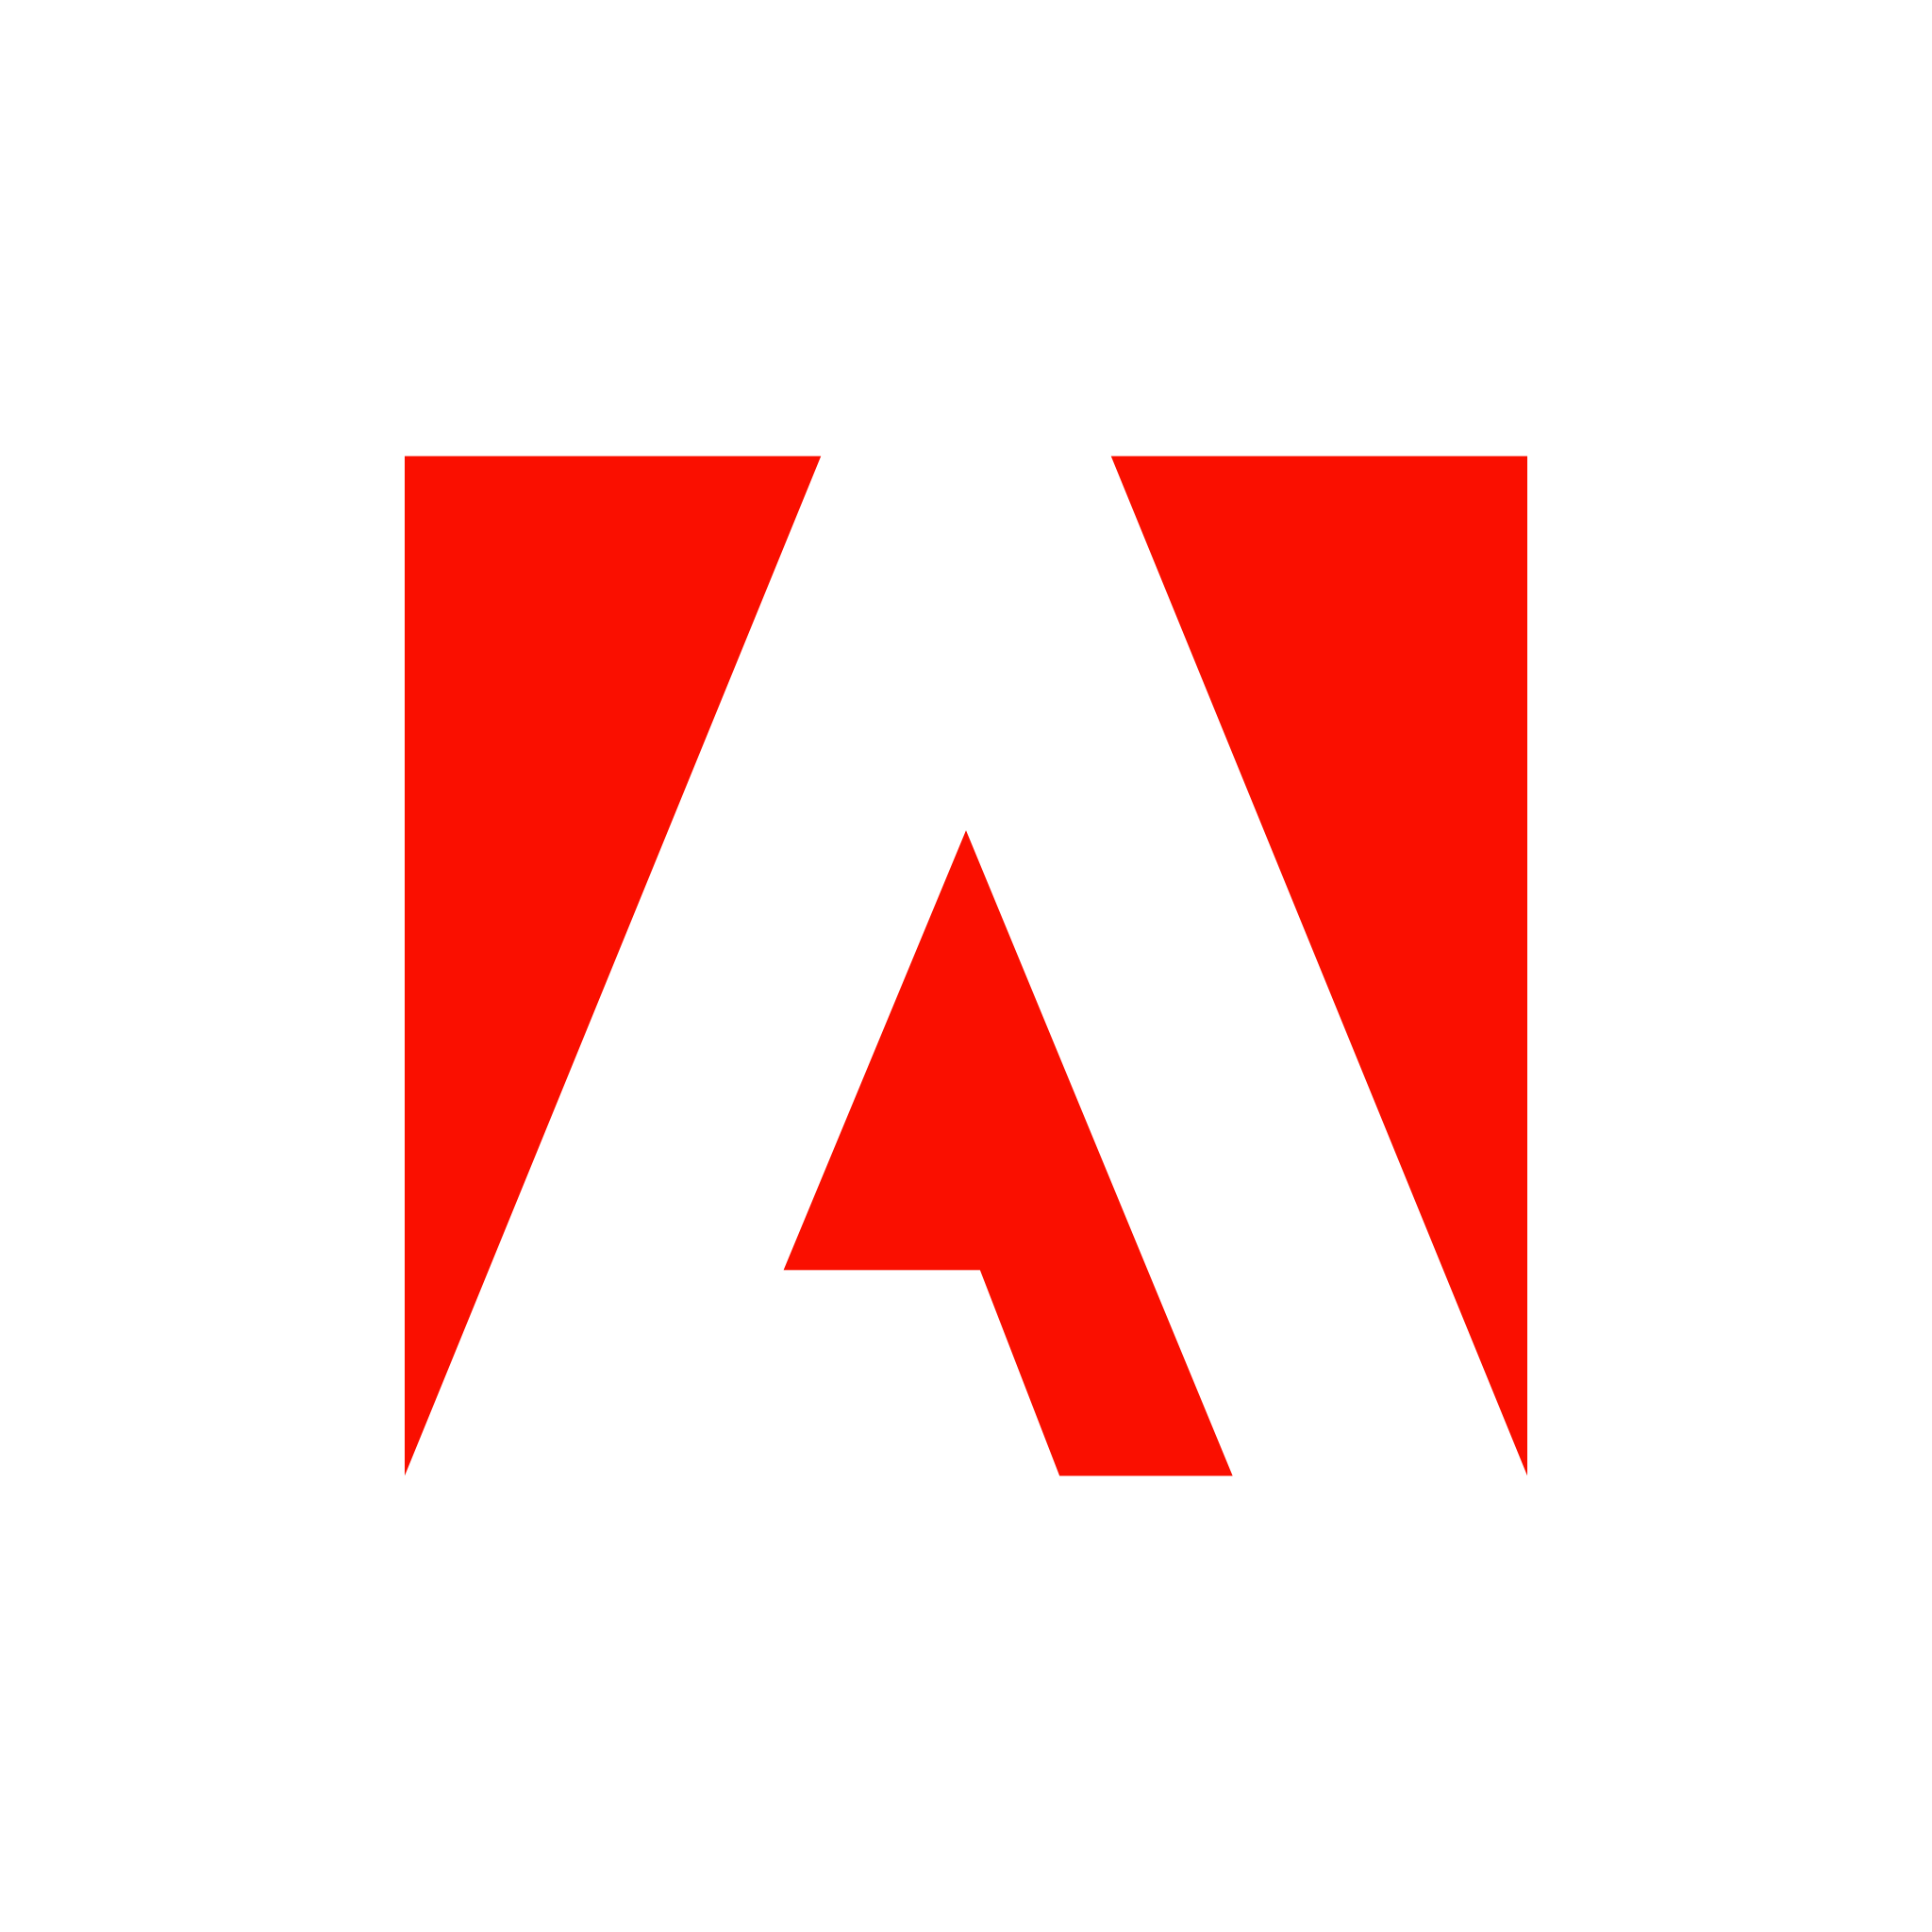 Isologo de Adobe SVG